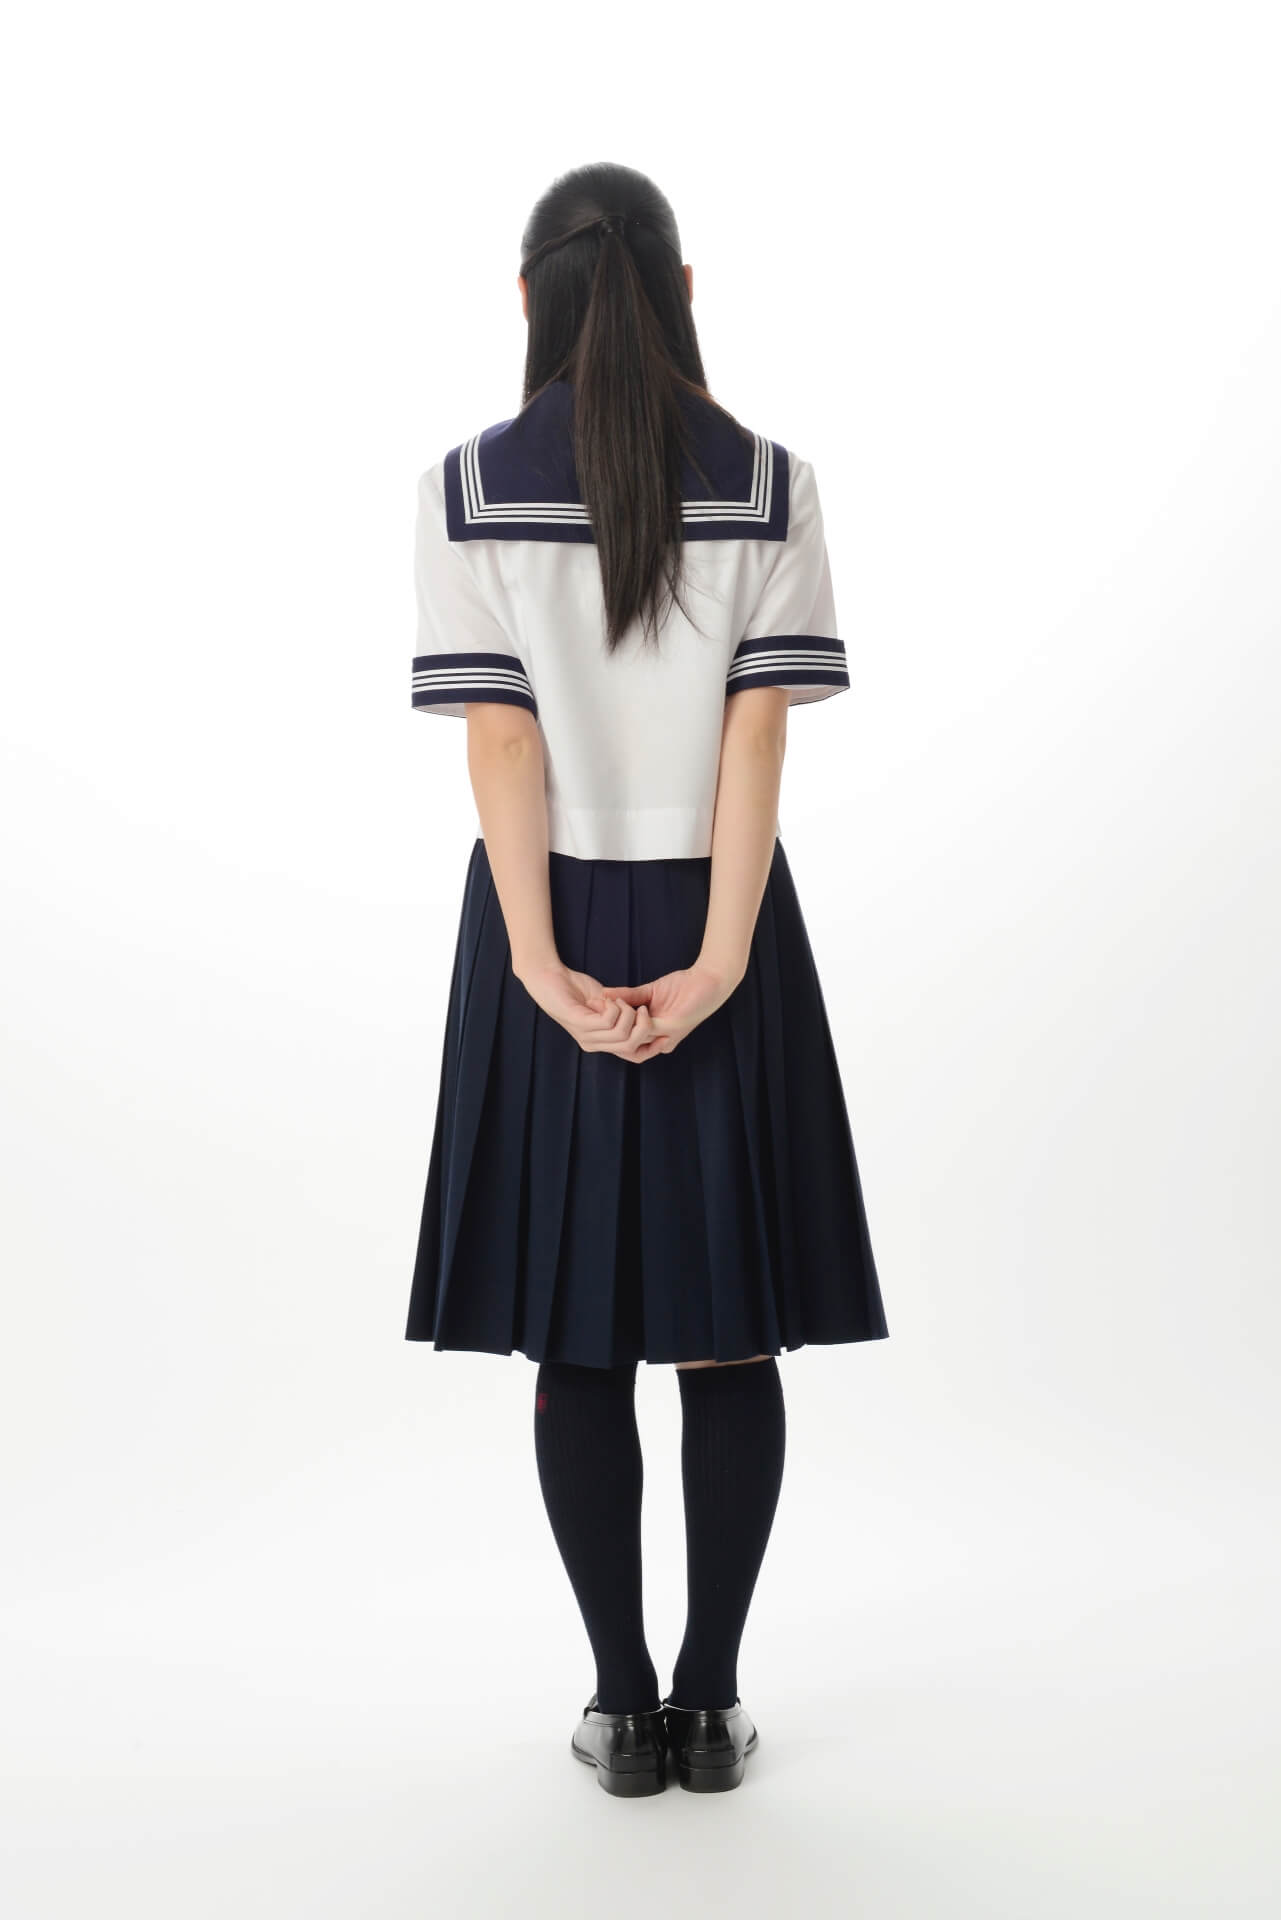 Japanese Junior High School Uniforms